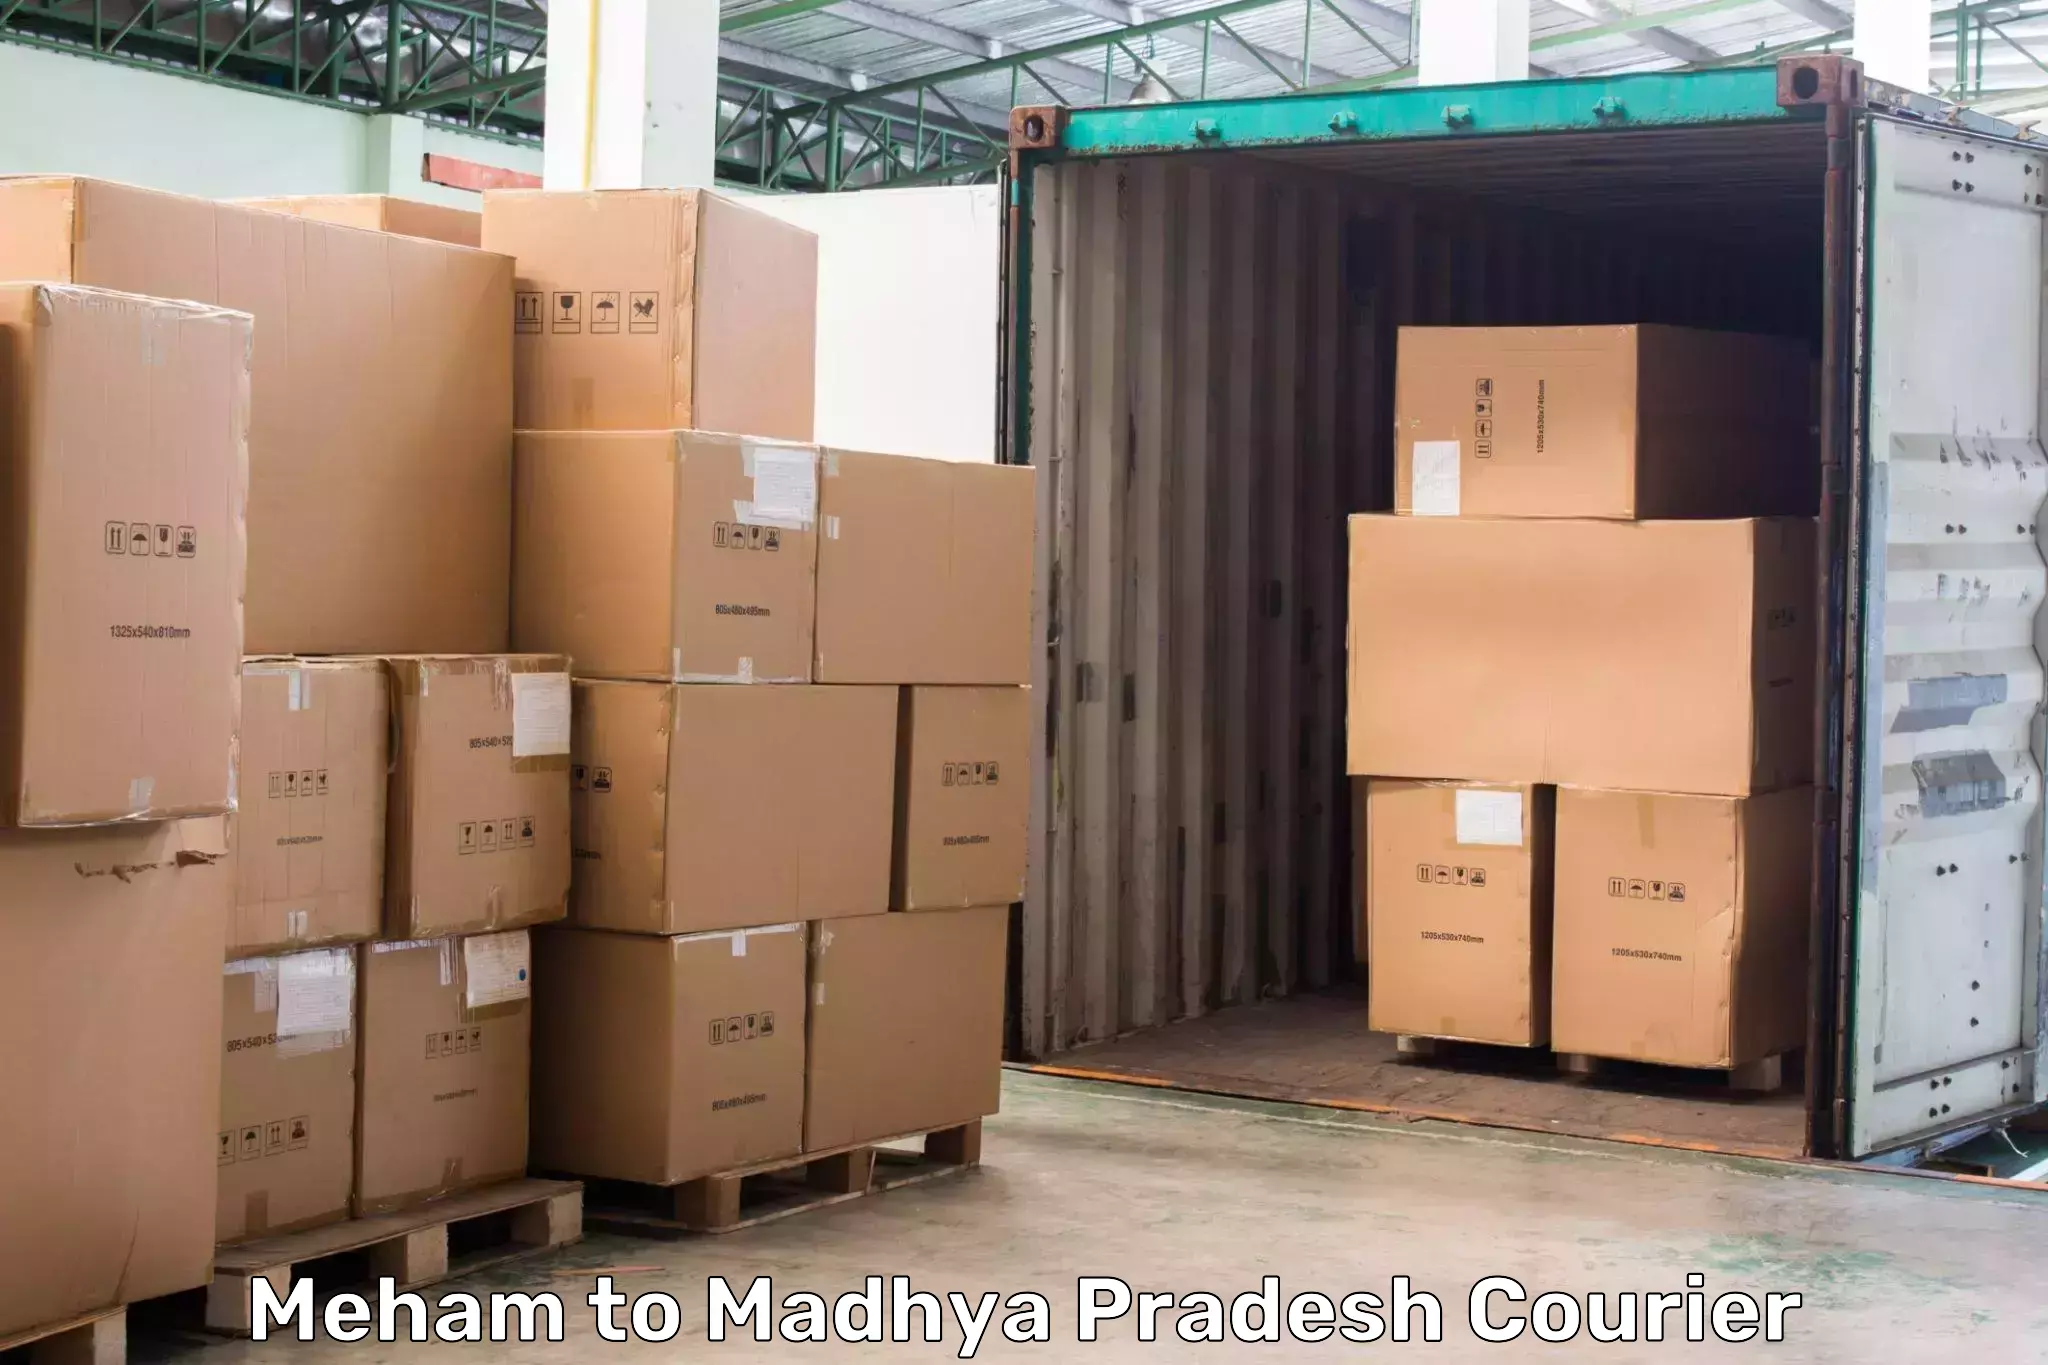 Digital courier platforms Meham to Nainpur